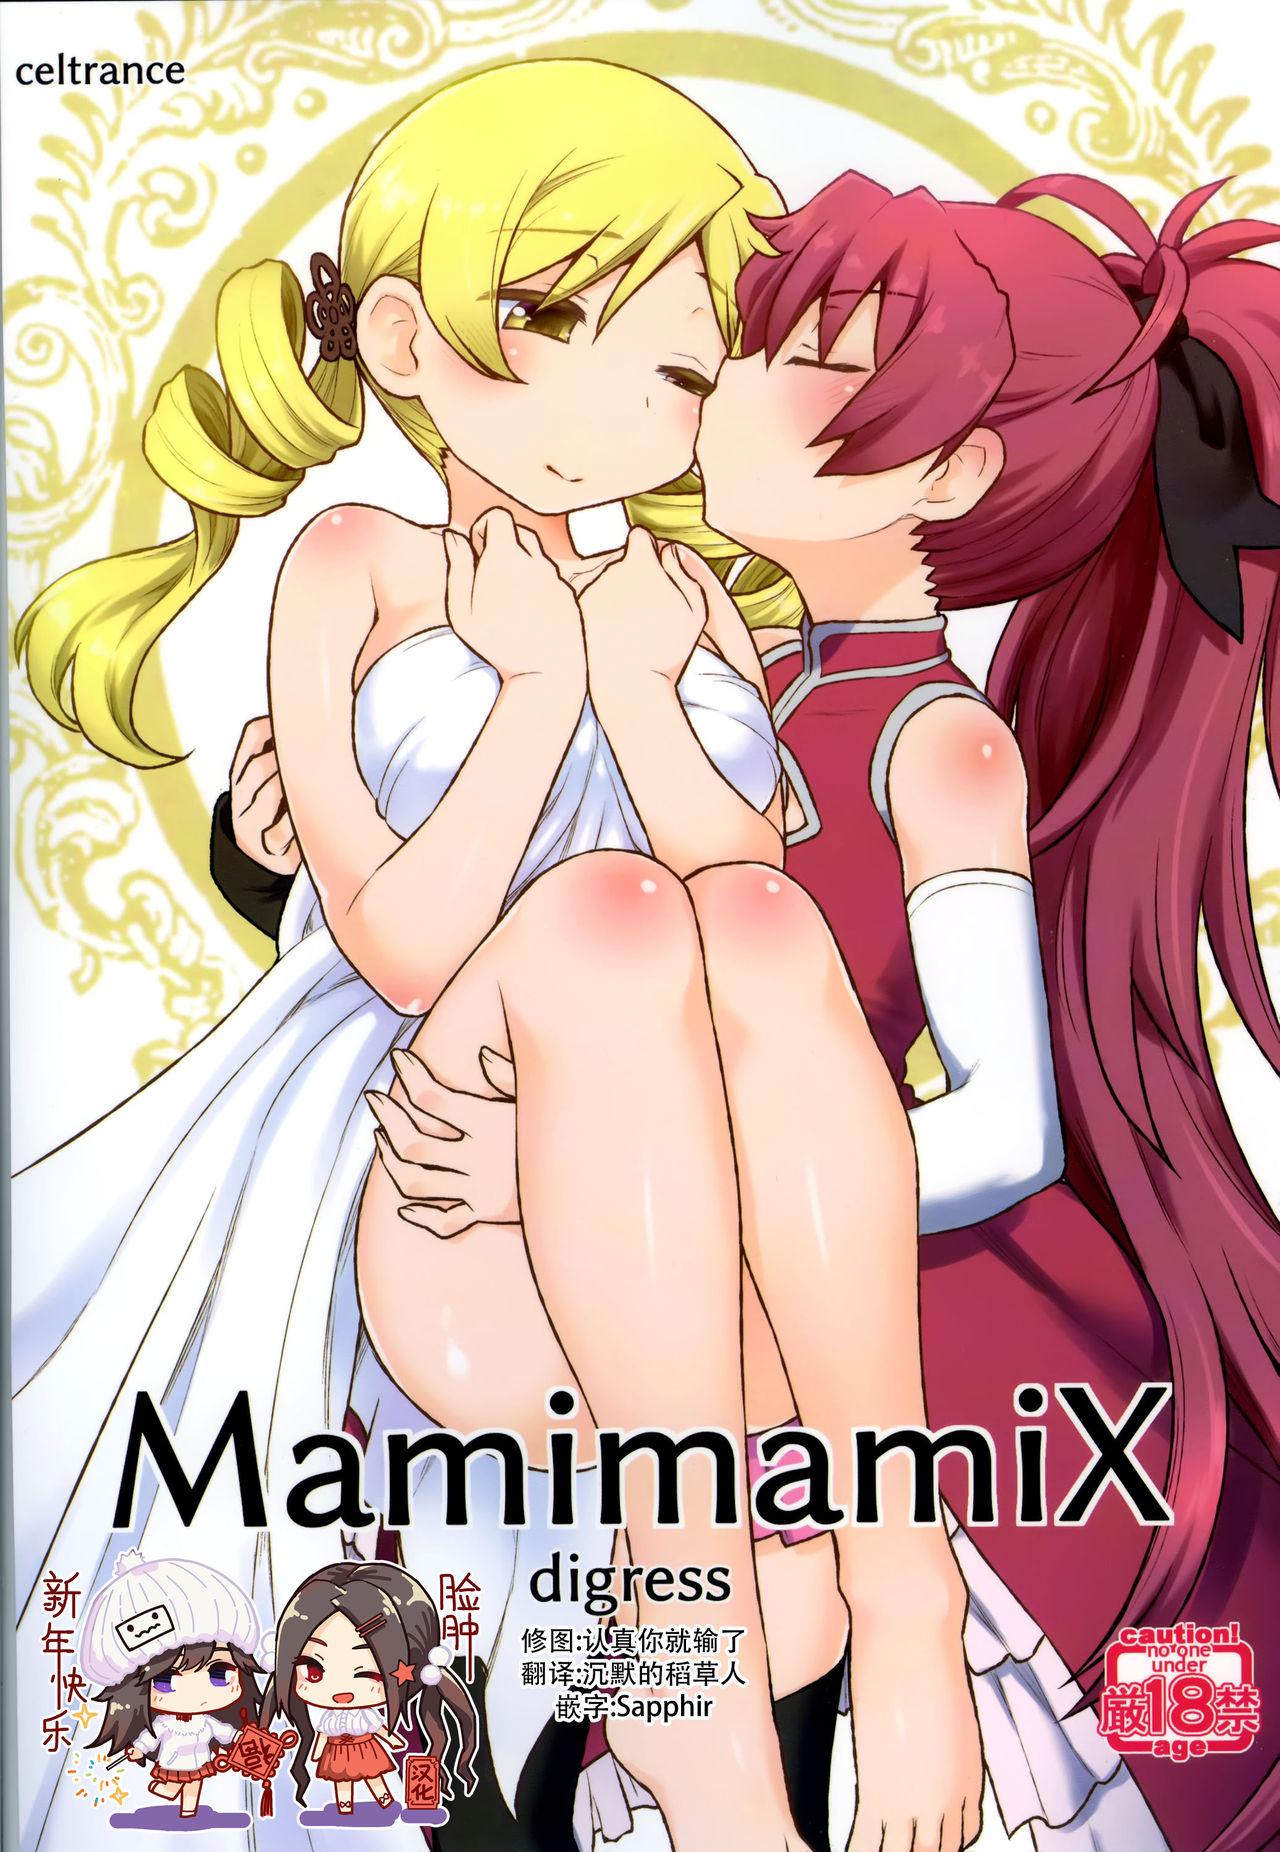 MamimamiX digress 0